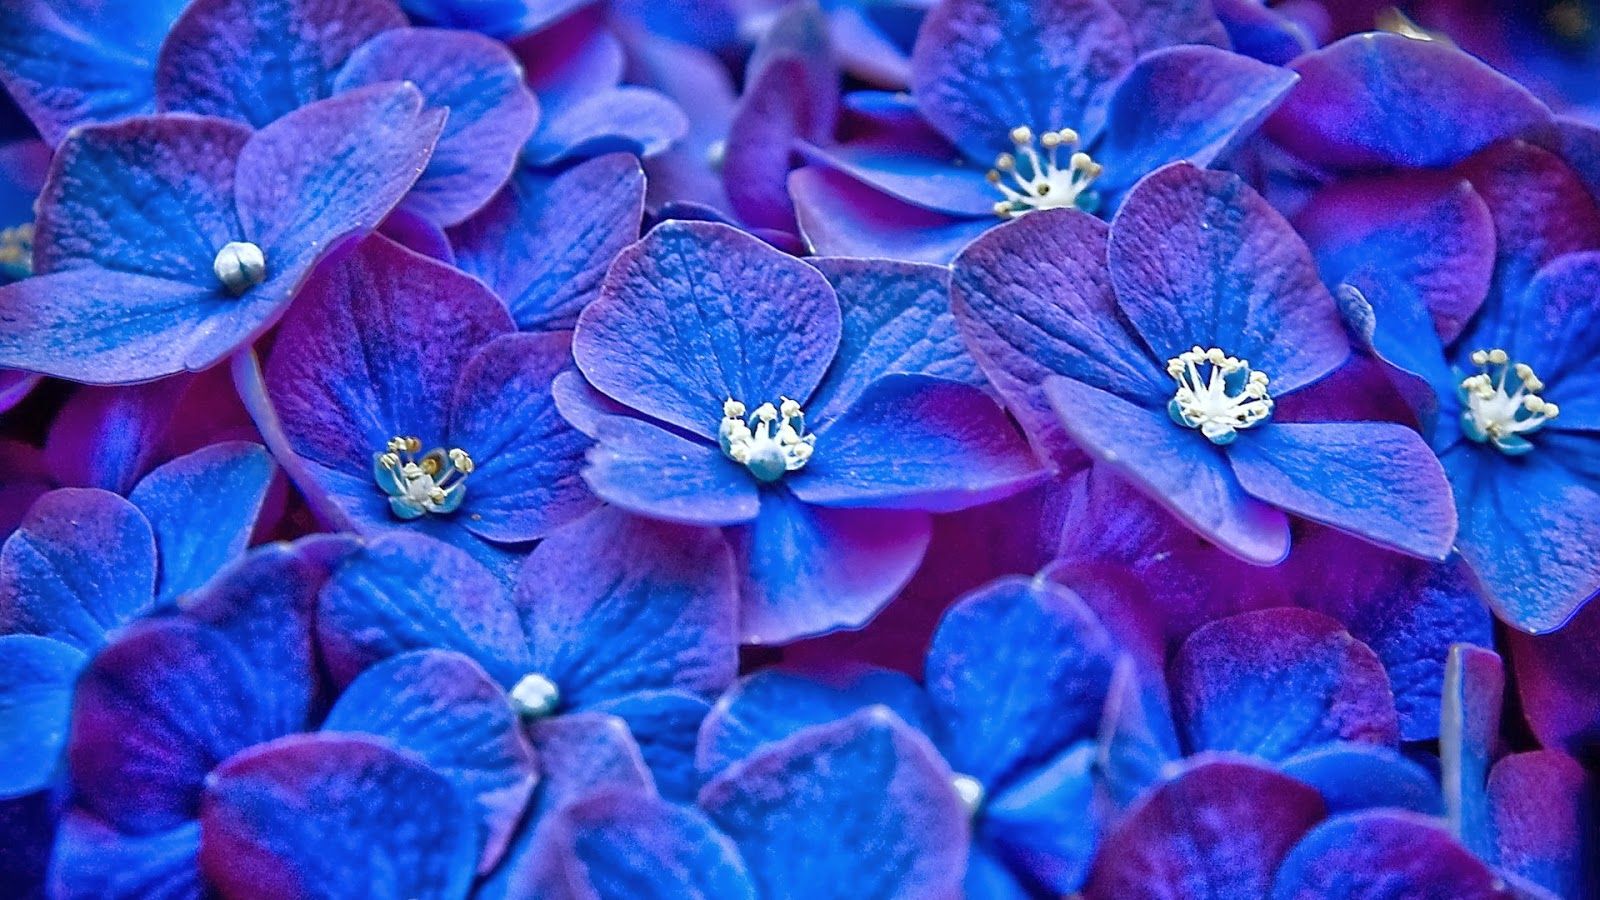 Download Wallpaper 480x800 colors composition dark petals HTC Samsung  Galaxy S22 Ace 480x800 HD Back  Blue flowers Blue flower wallpaper  Dark blue flowers